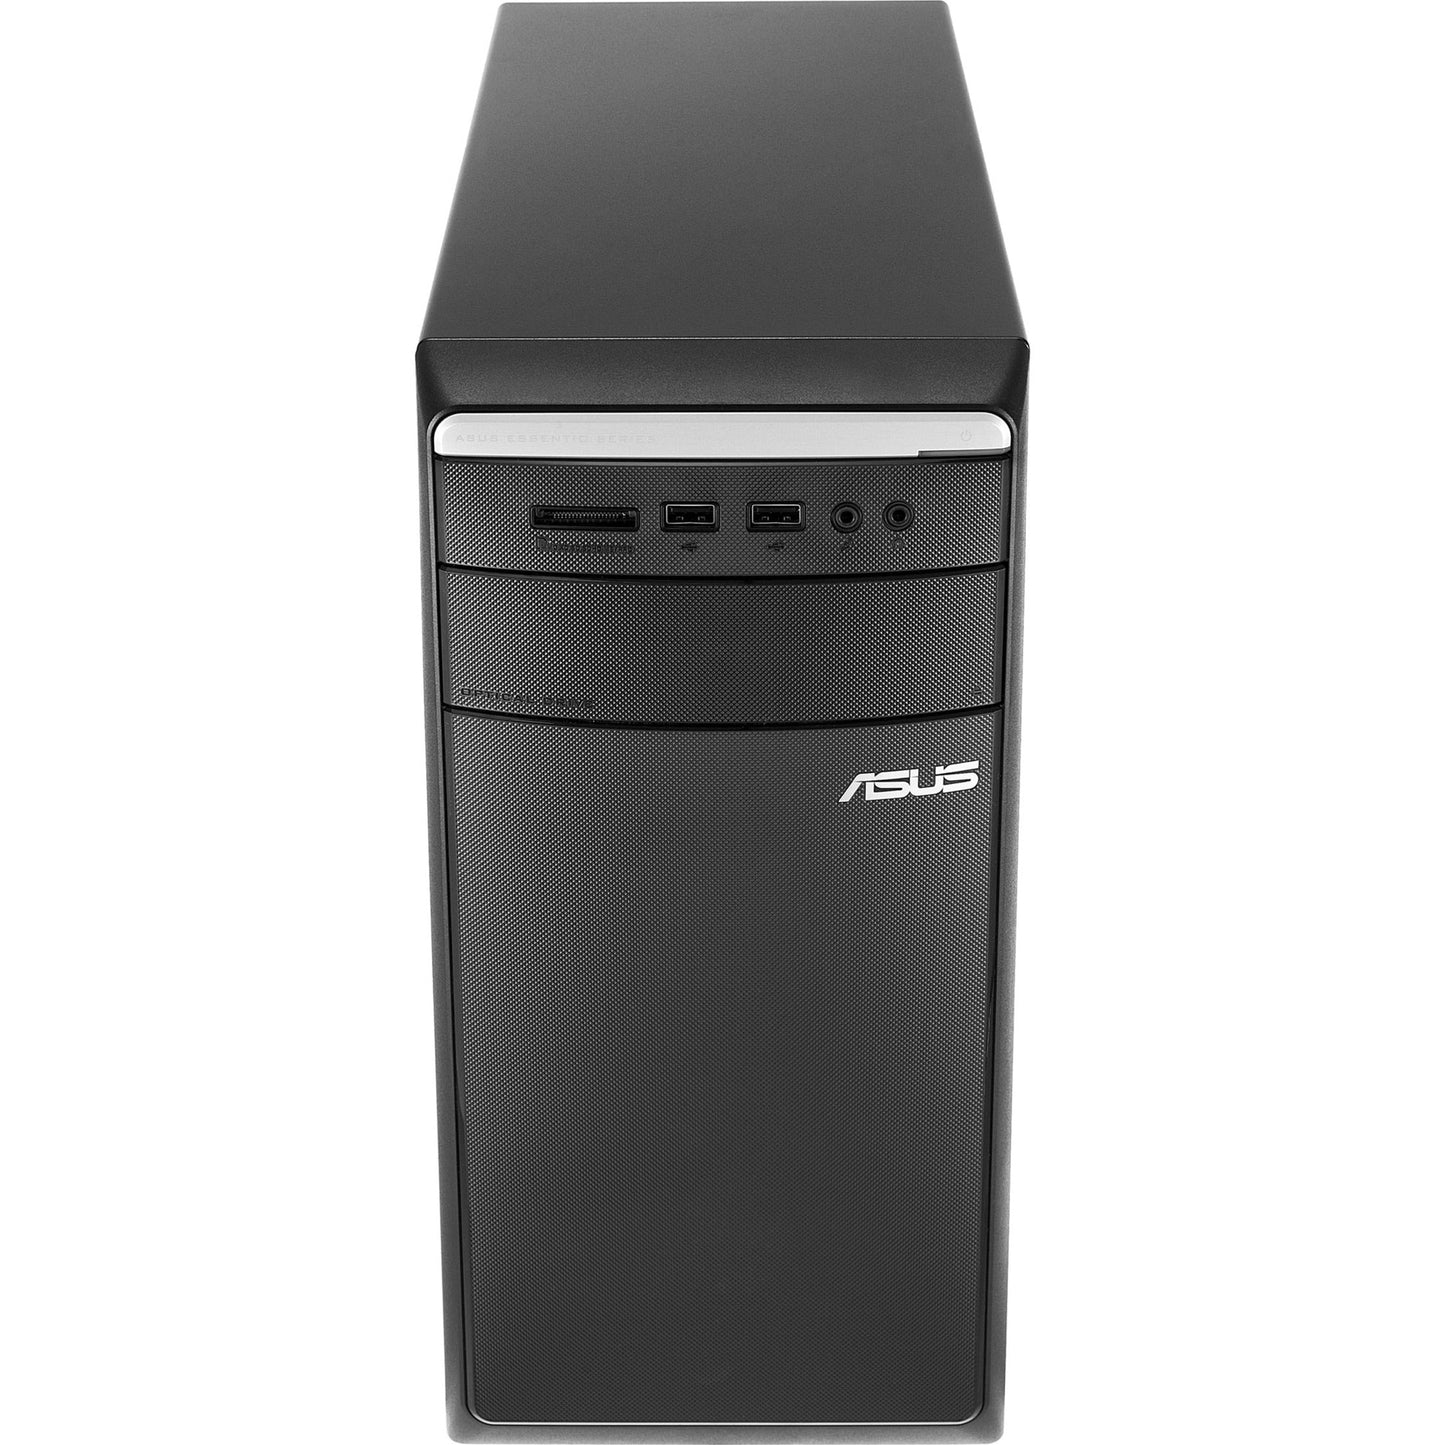 Asus M11AD-US003S Desktop Computer - Intel Core i5 4th Gen i5-4440S Quad-core (4 Core) 2.80 GHz - 6 GB RAM DDR3 SDRAM - 1 TB HDD - Tower